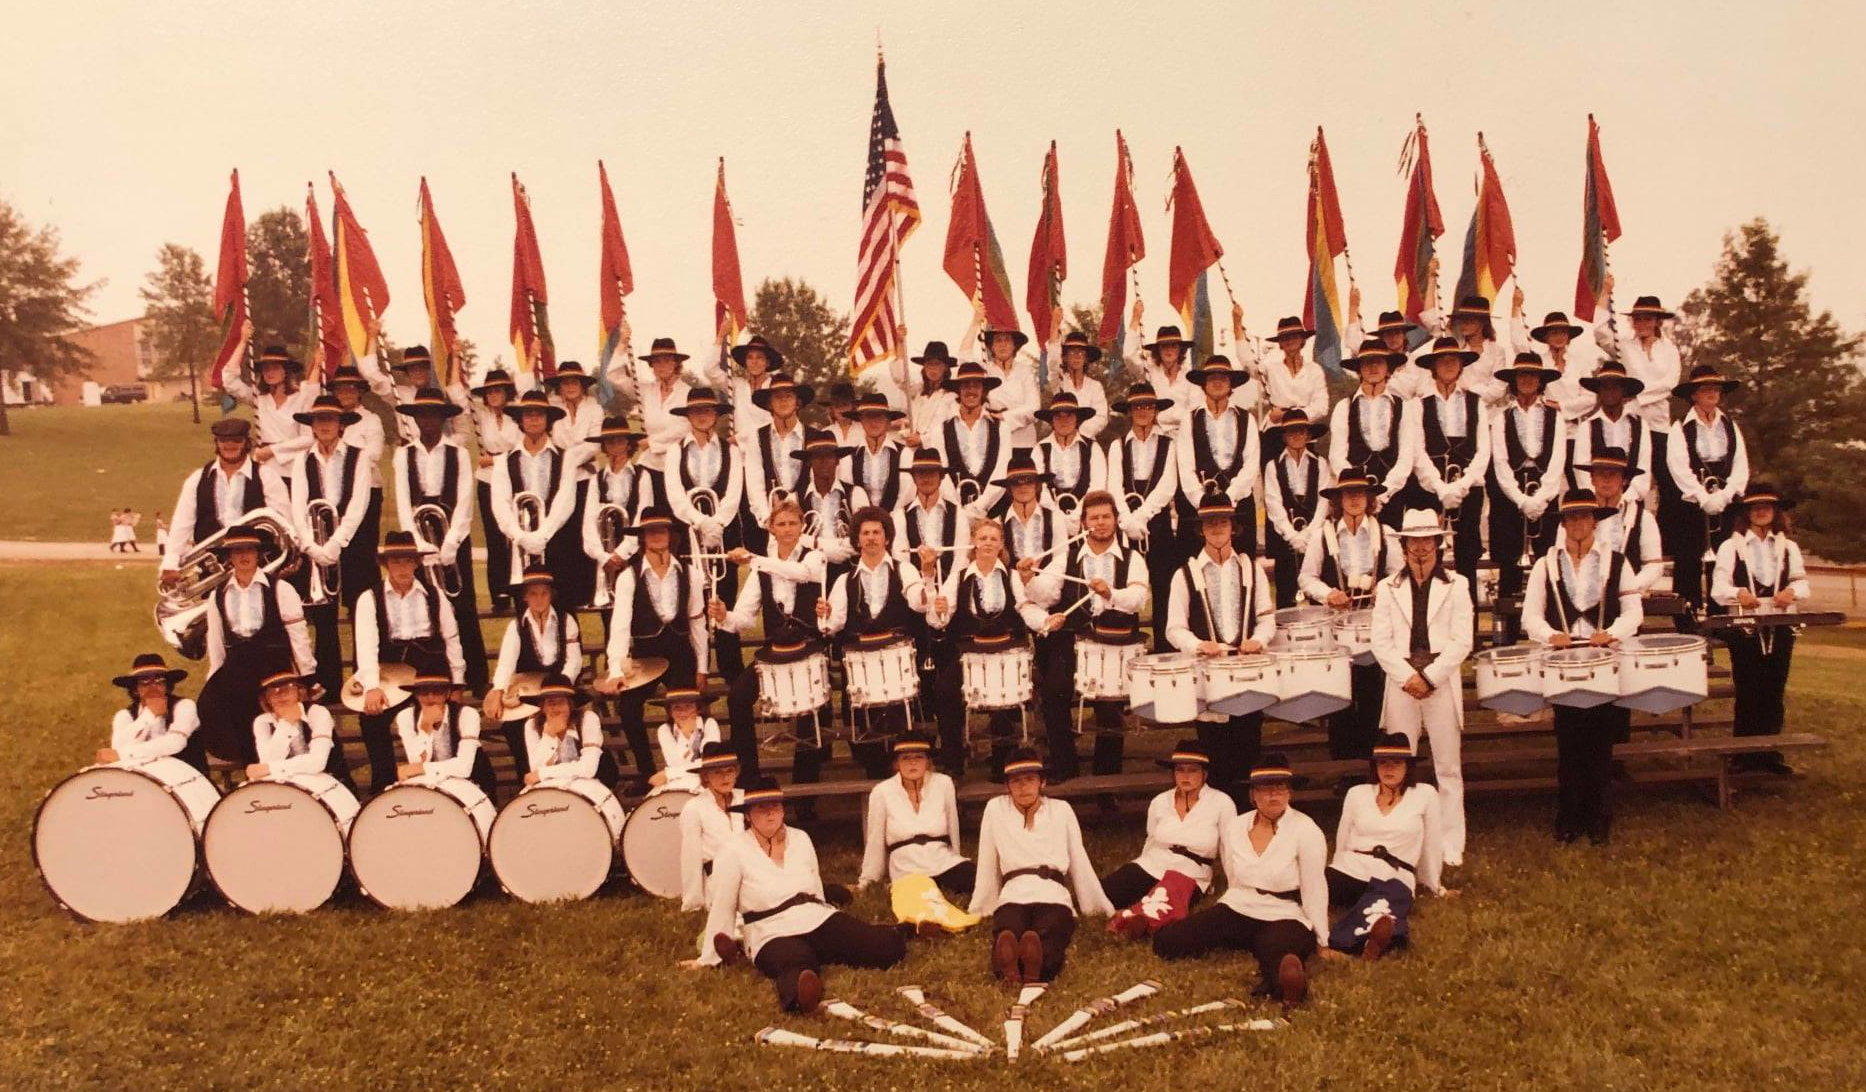 Drum and bugle corps (classic) - Wikipedia